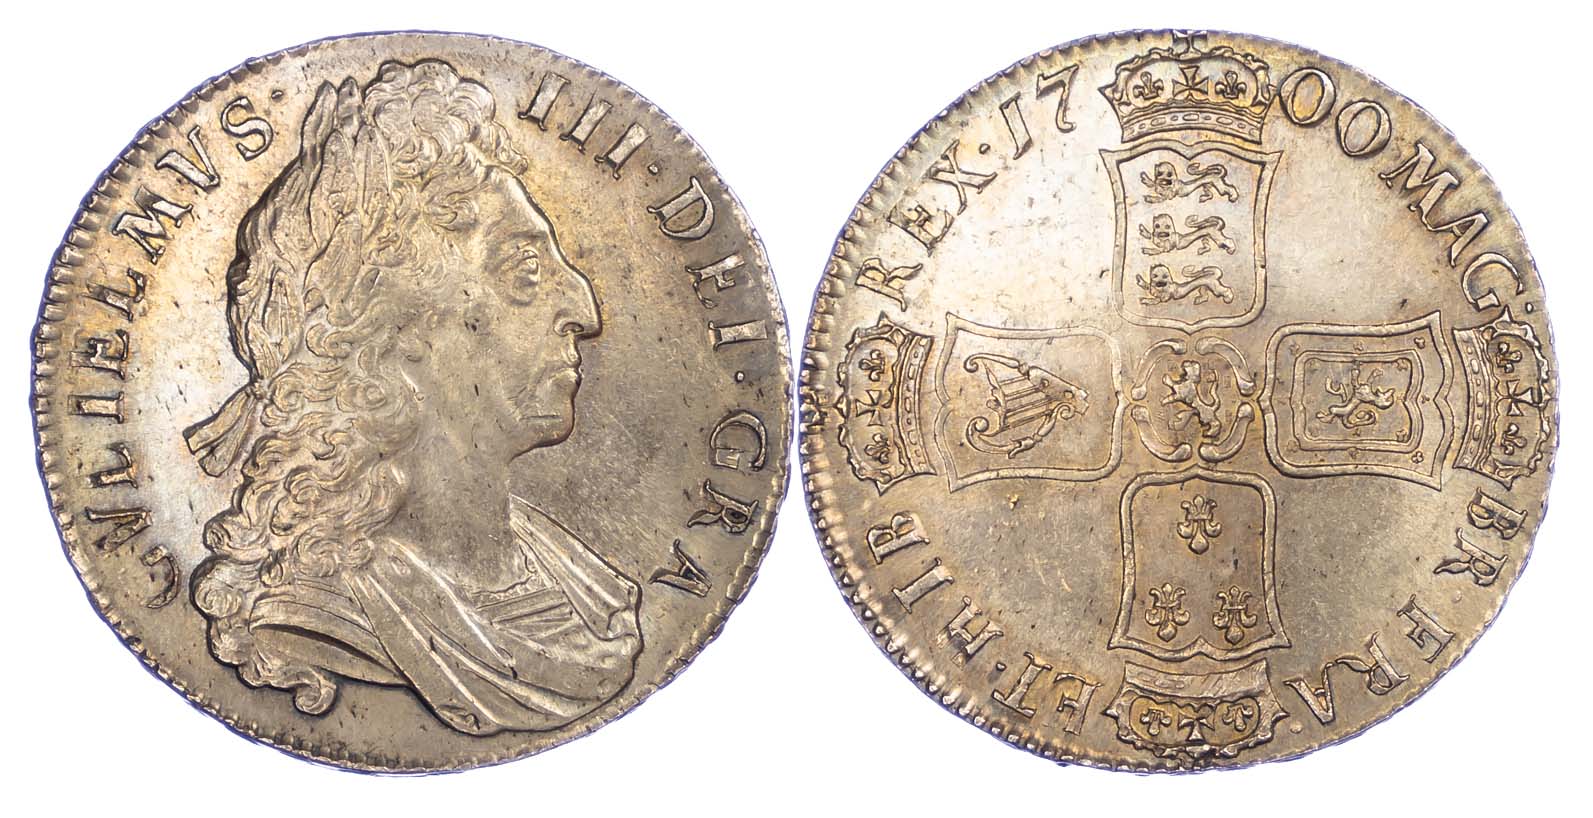 William III, Crown, 1700, DVODECIMO edge | Baldwin's